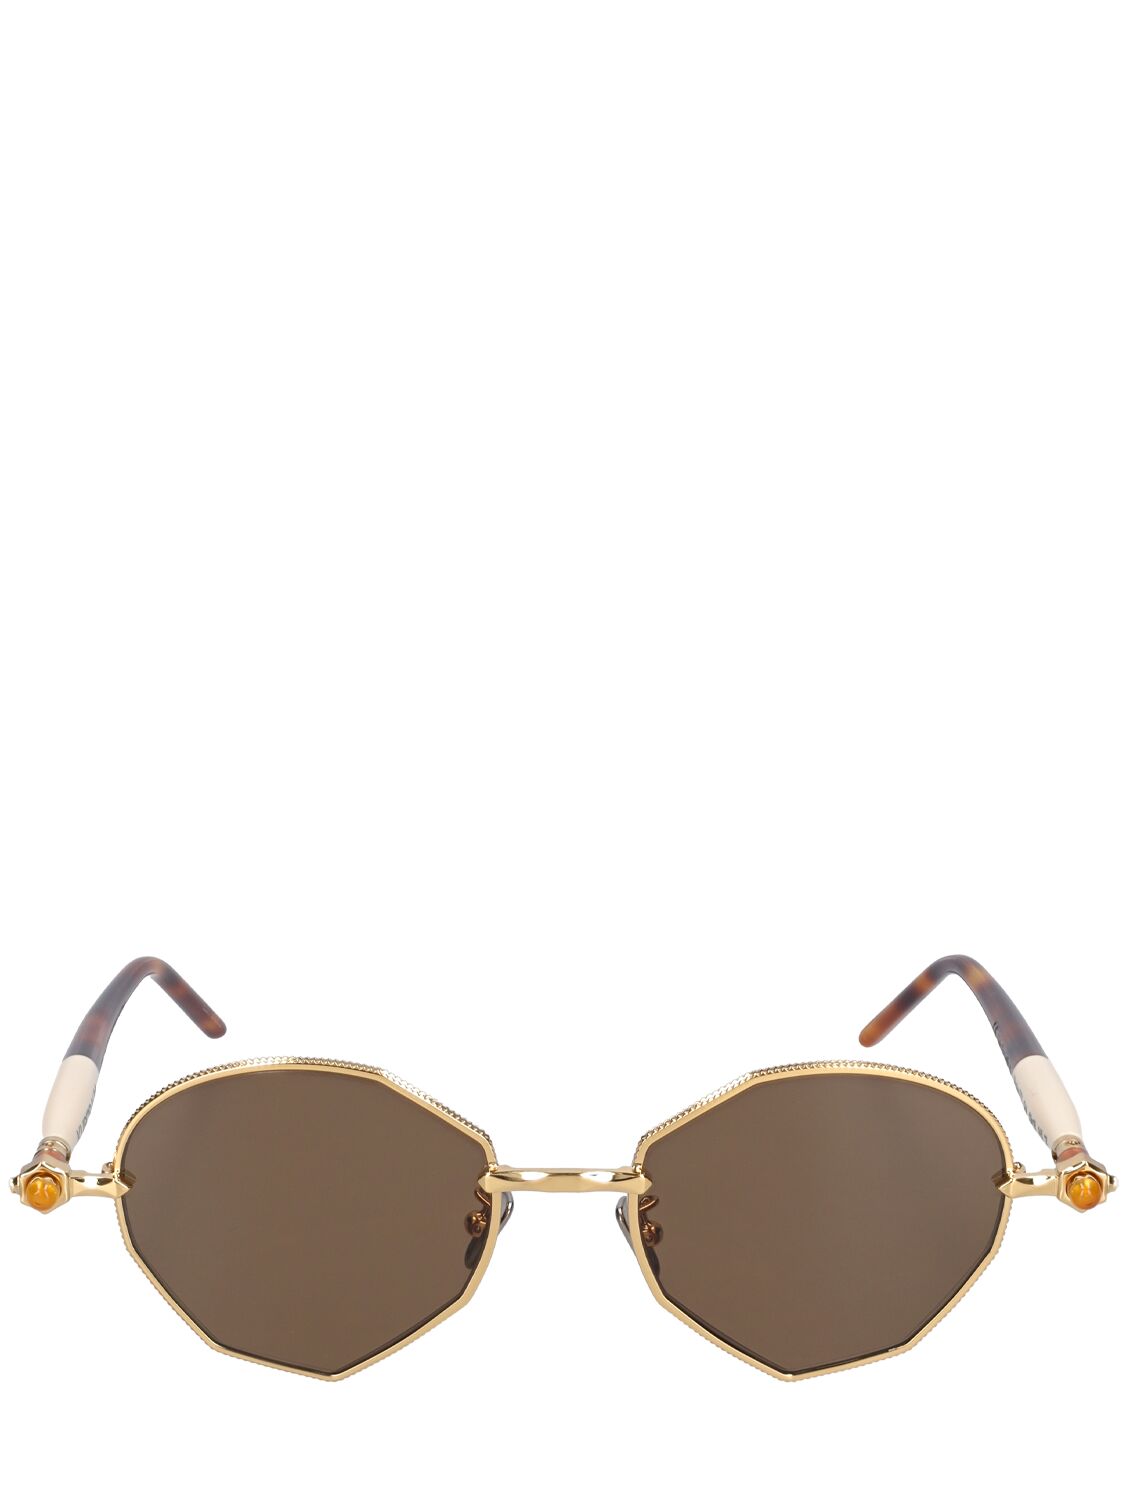 P71 Round Asymmetrical Sunglasses